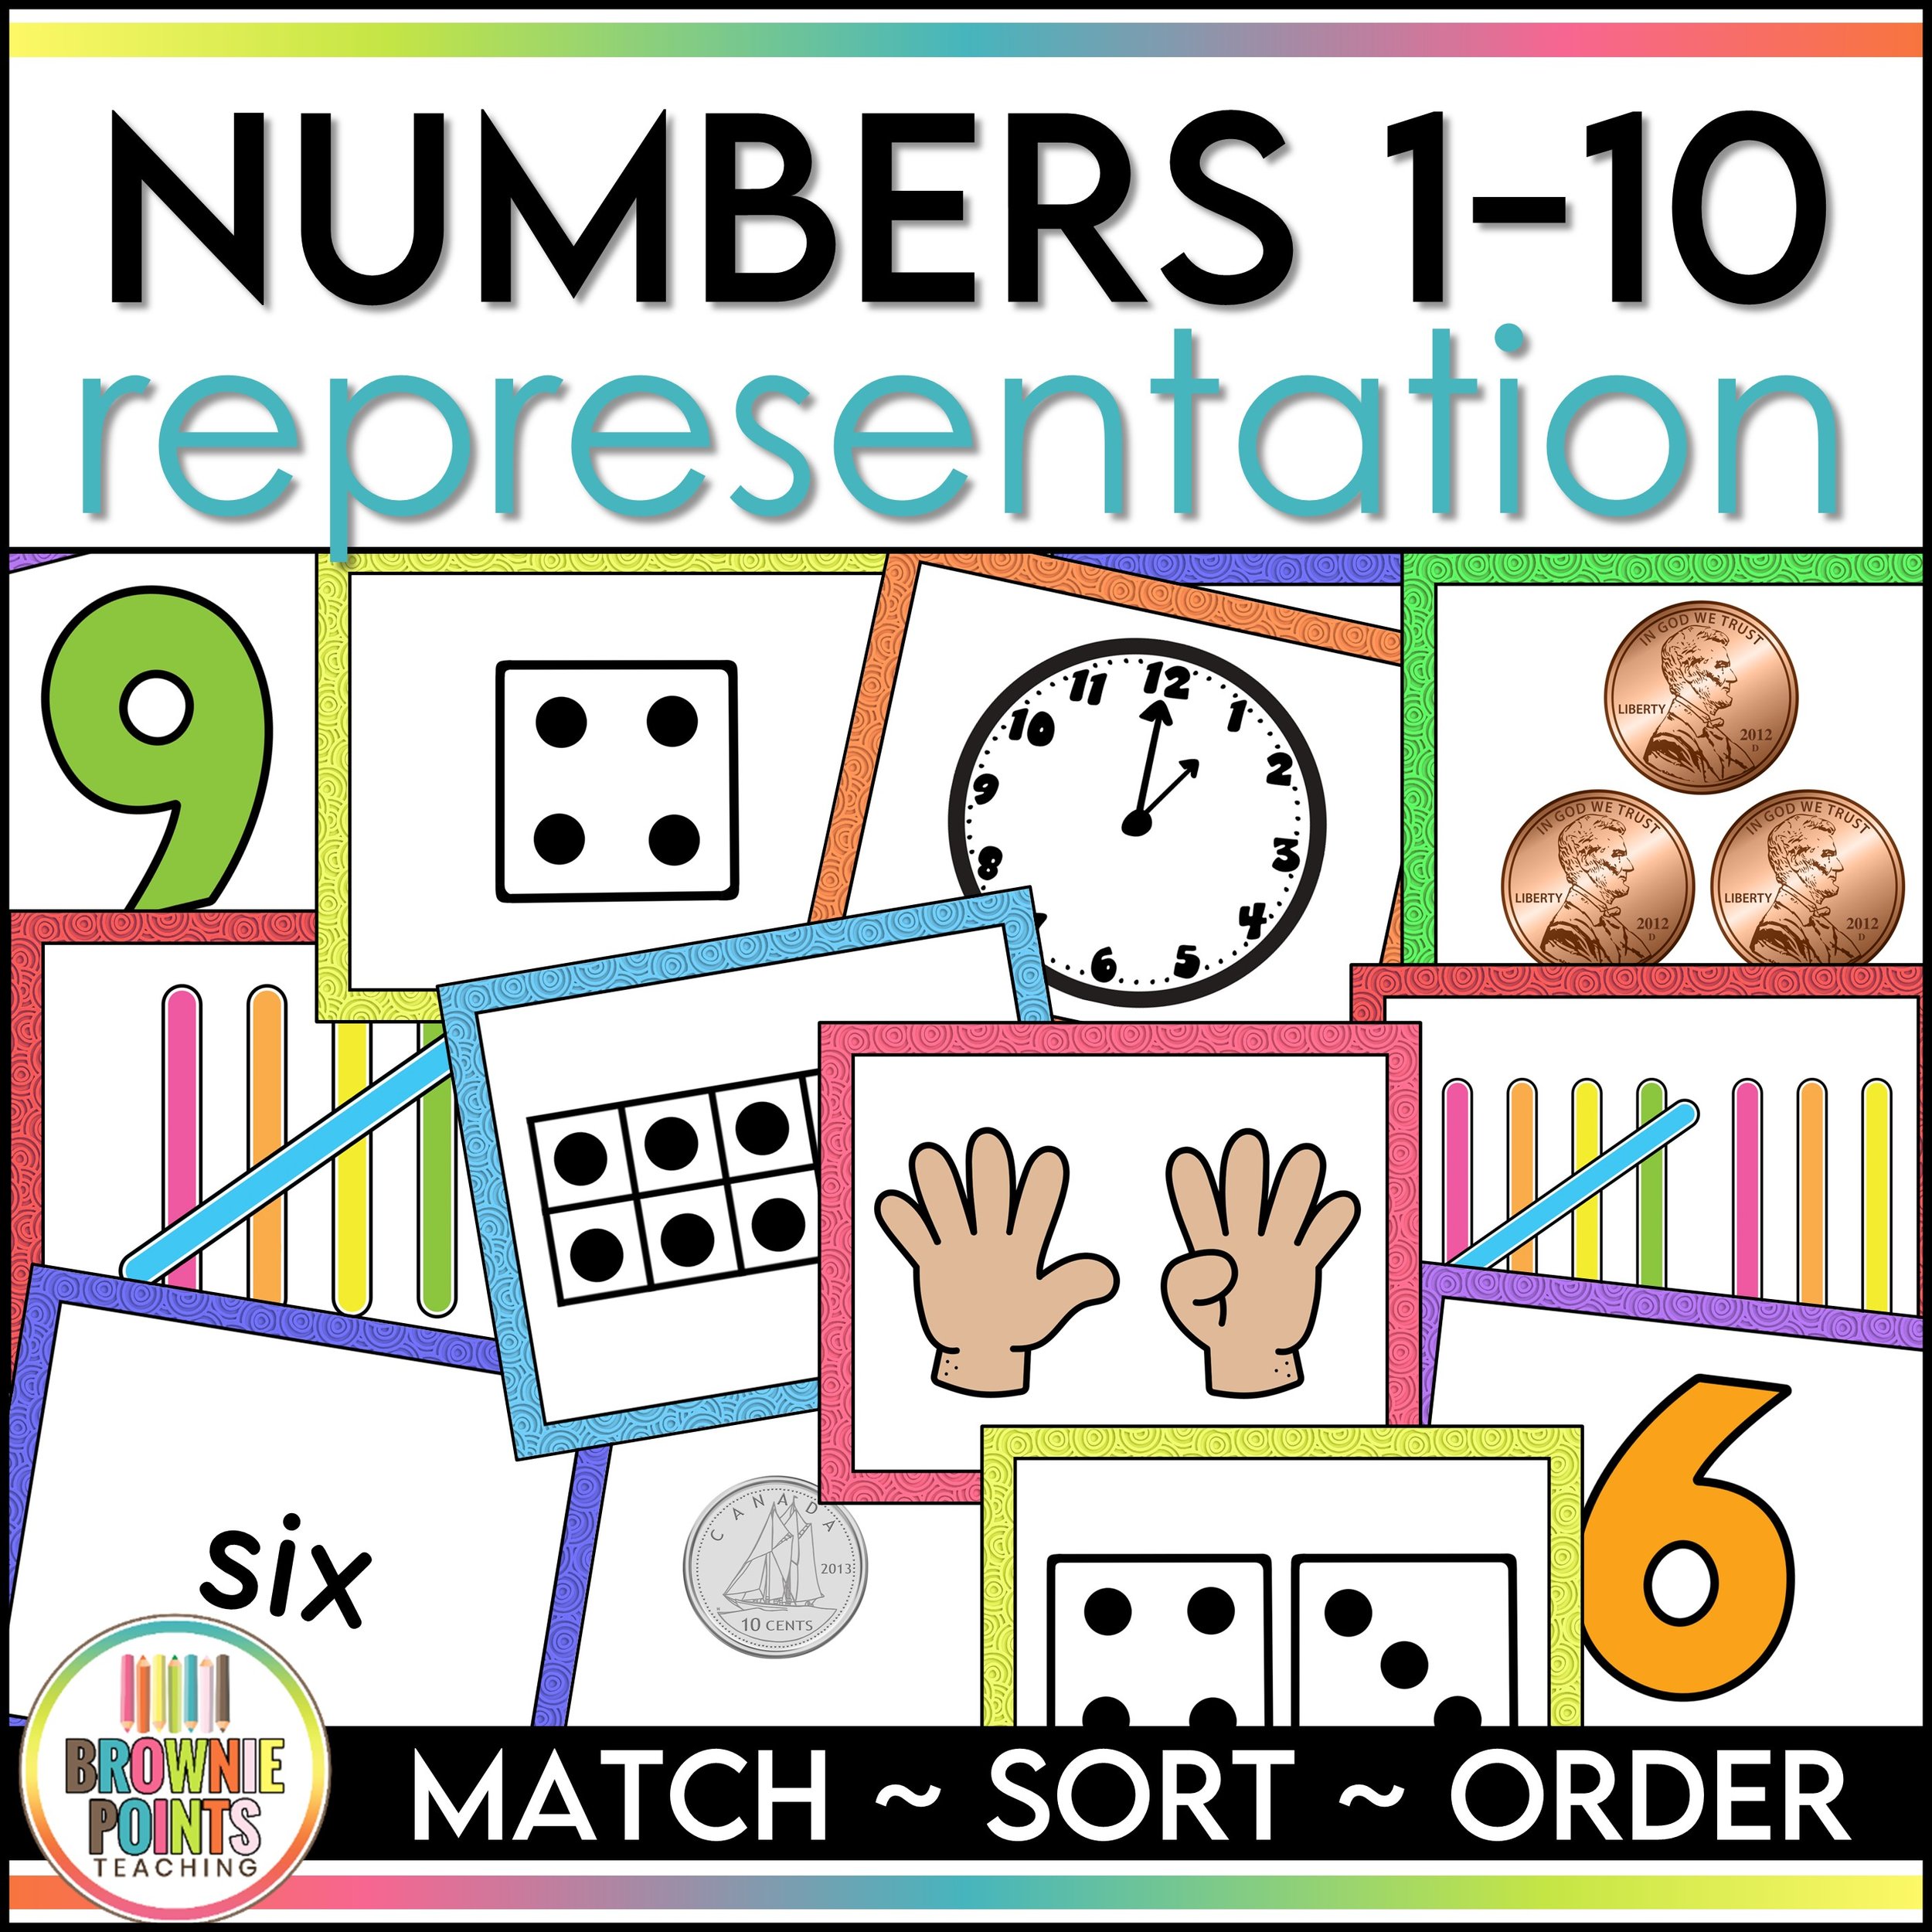 Number Representation and Subitizing 1-10